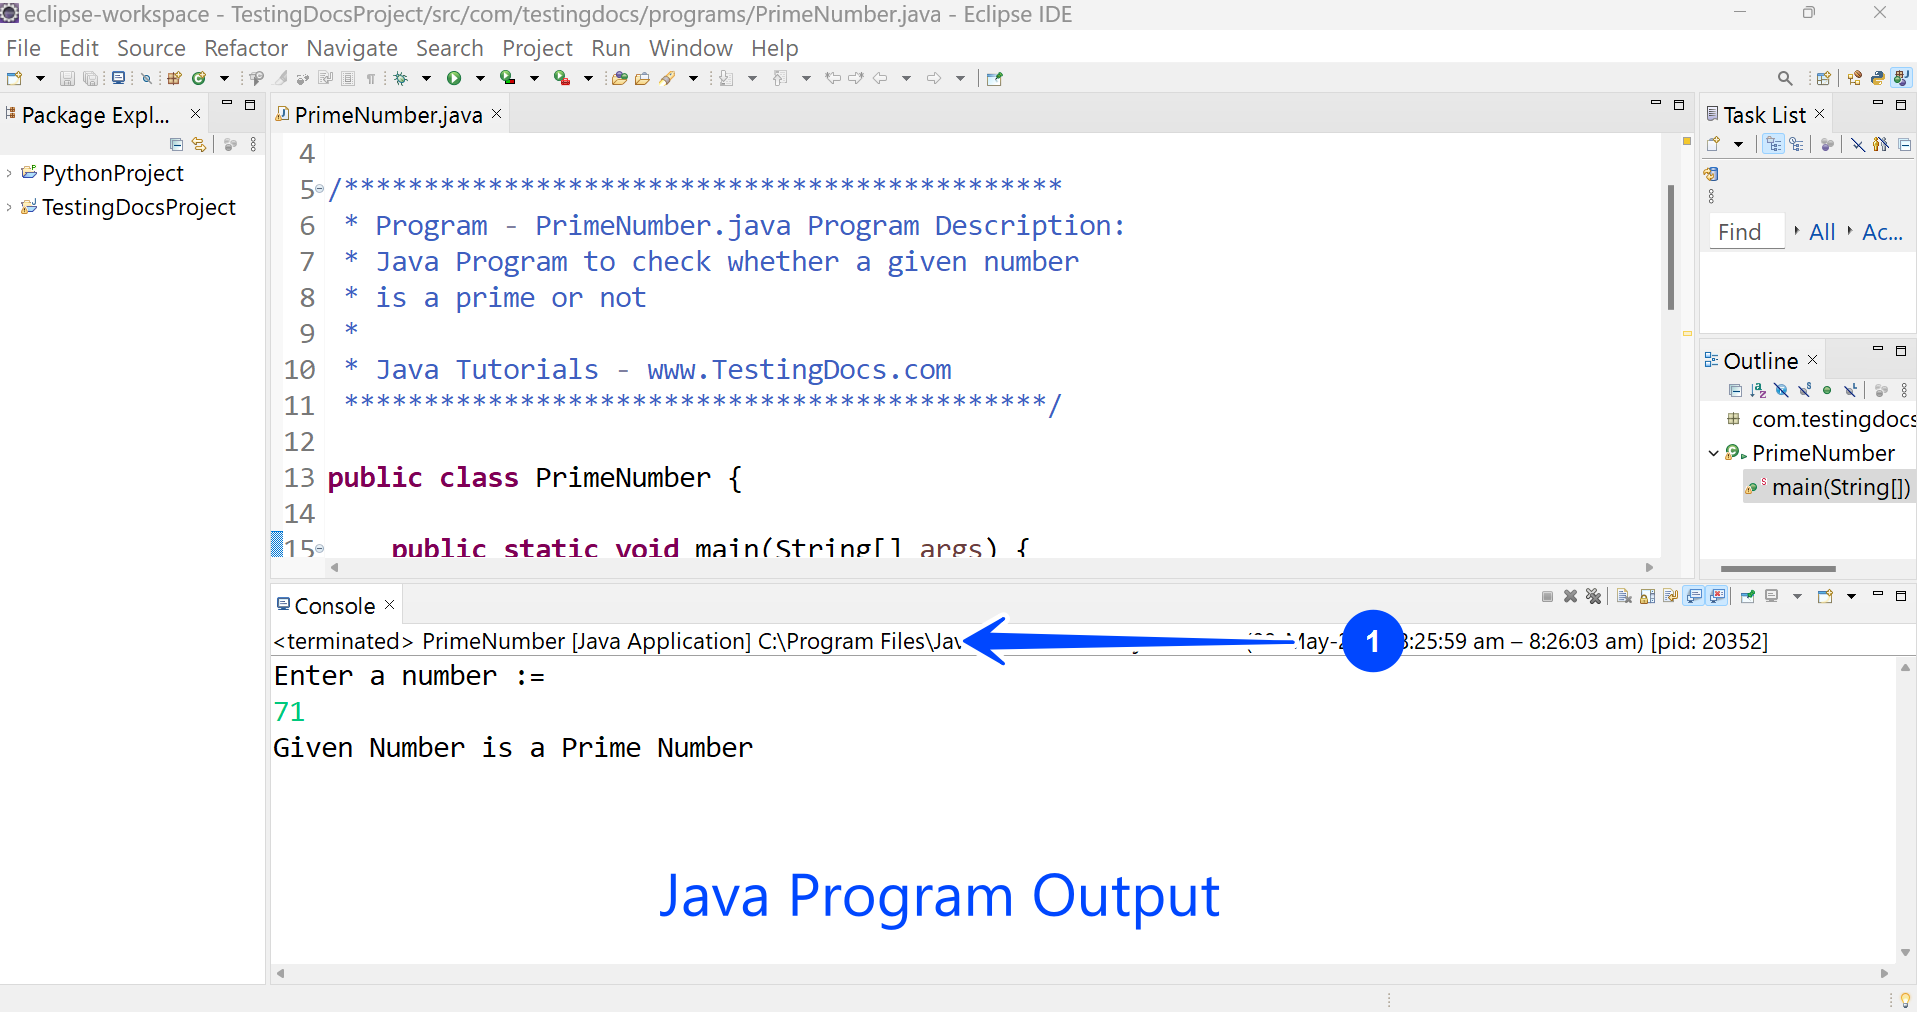 Prime Number Java Output